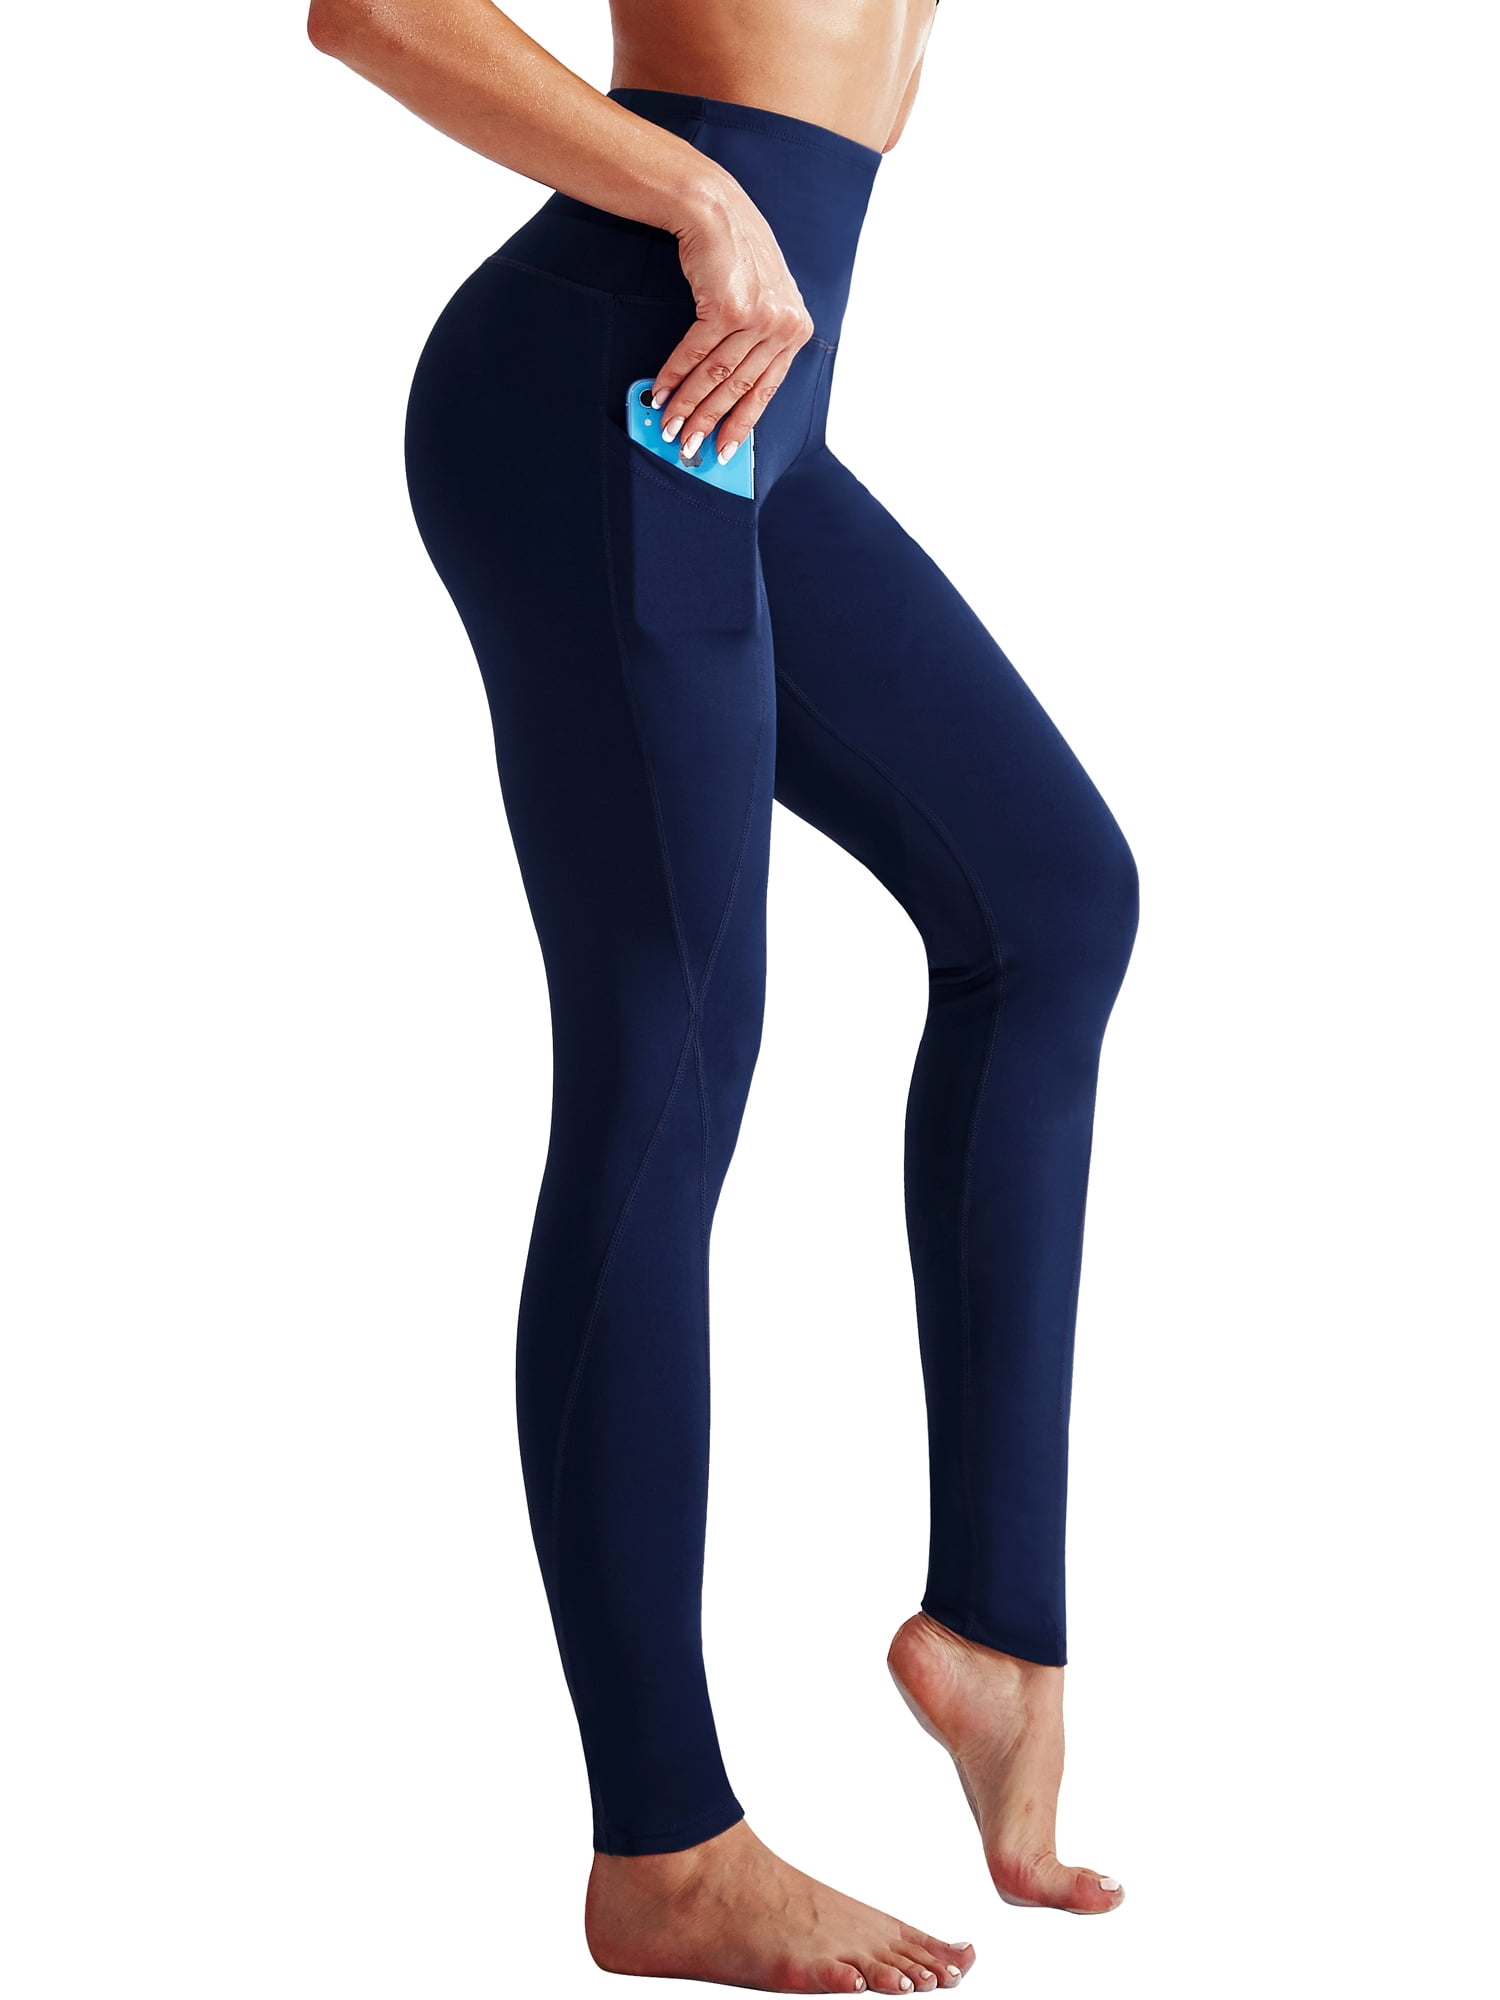 NELEUS Womens High Waist Running Workout Yoga Leggings with Pockets,Black+Navy  Blue,US Size S 